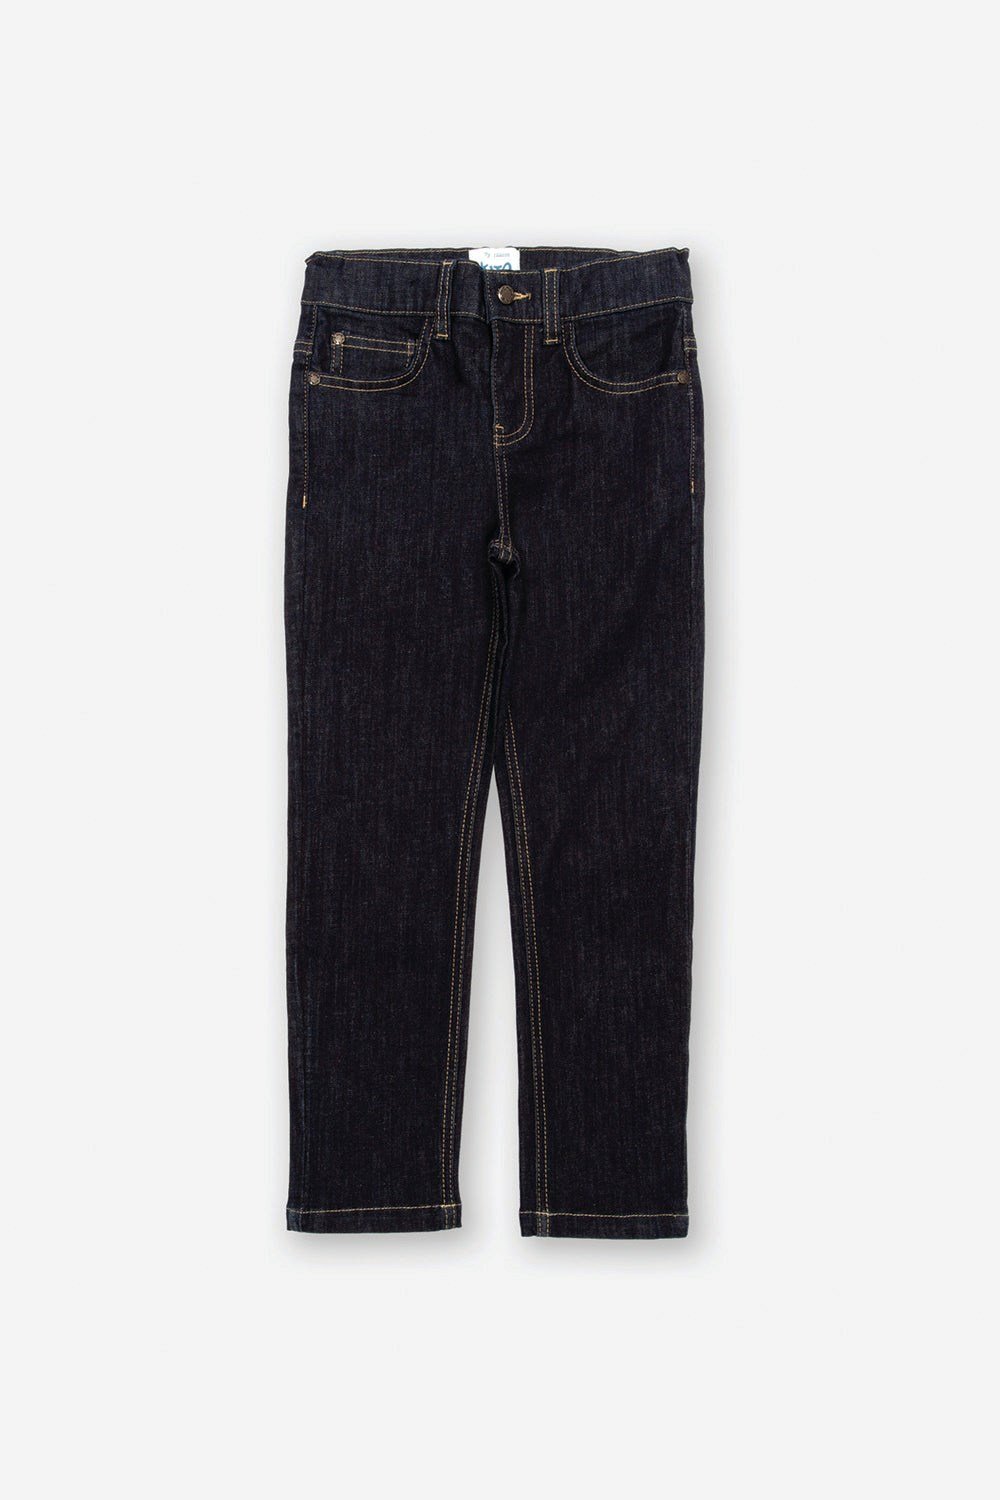 Stretch Baby/Kids Organic Cotton Denim Jeans -